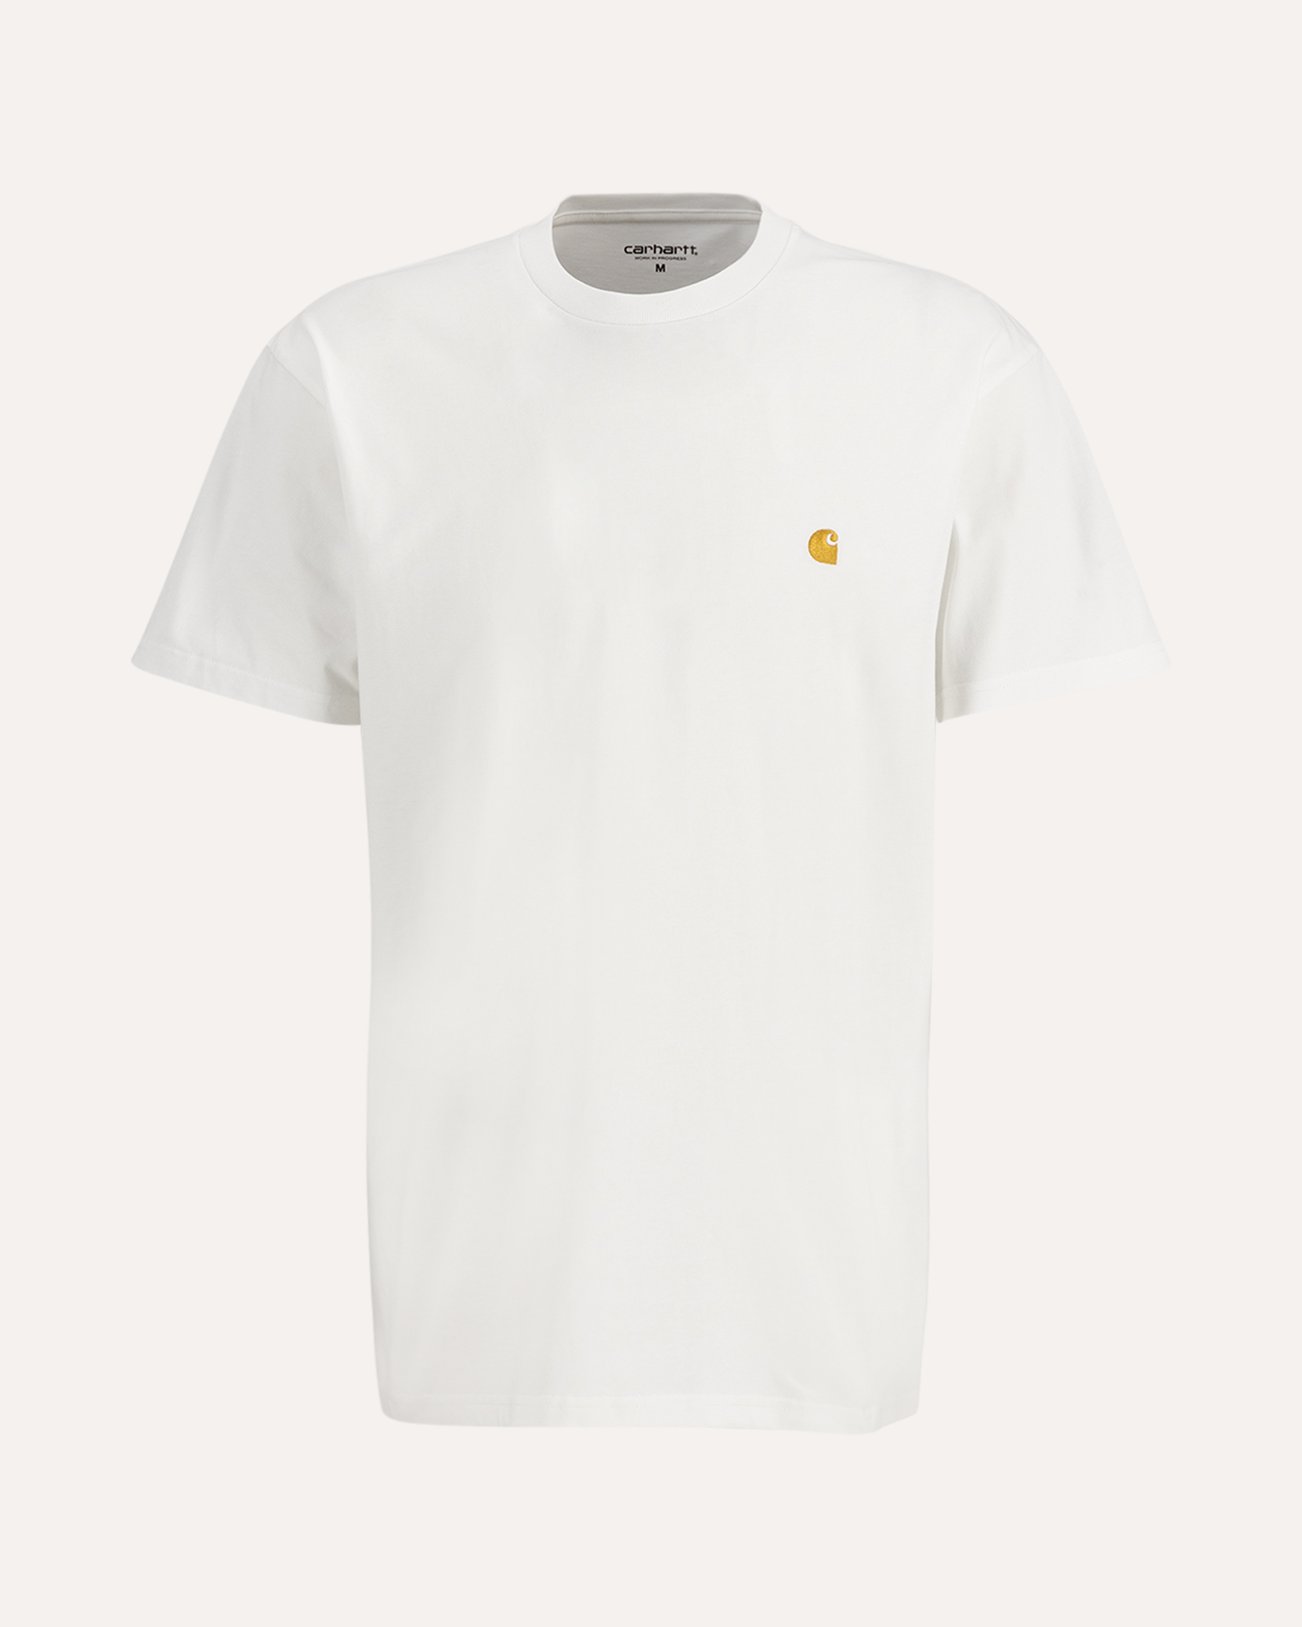 Carhartt WIP S/S Chase T-Shirt White 1